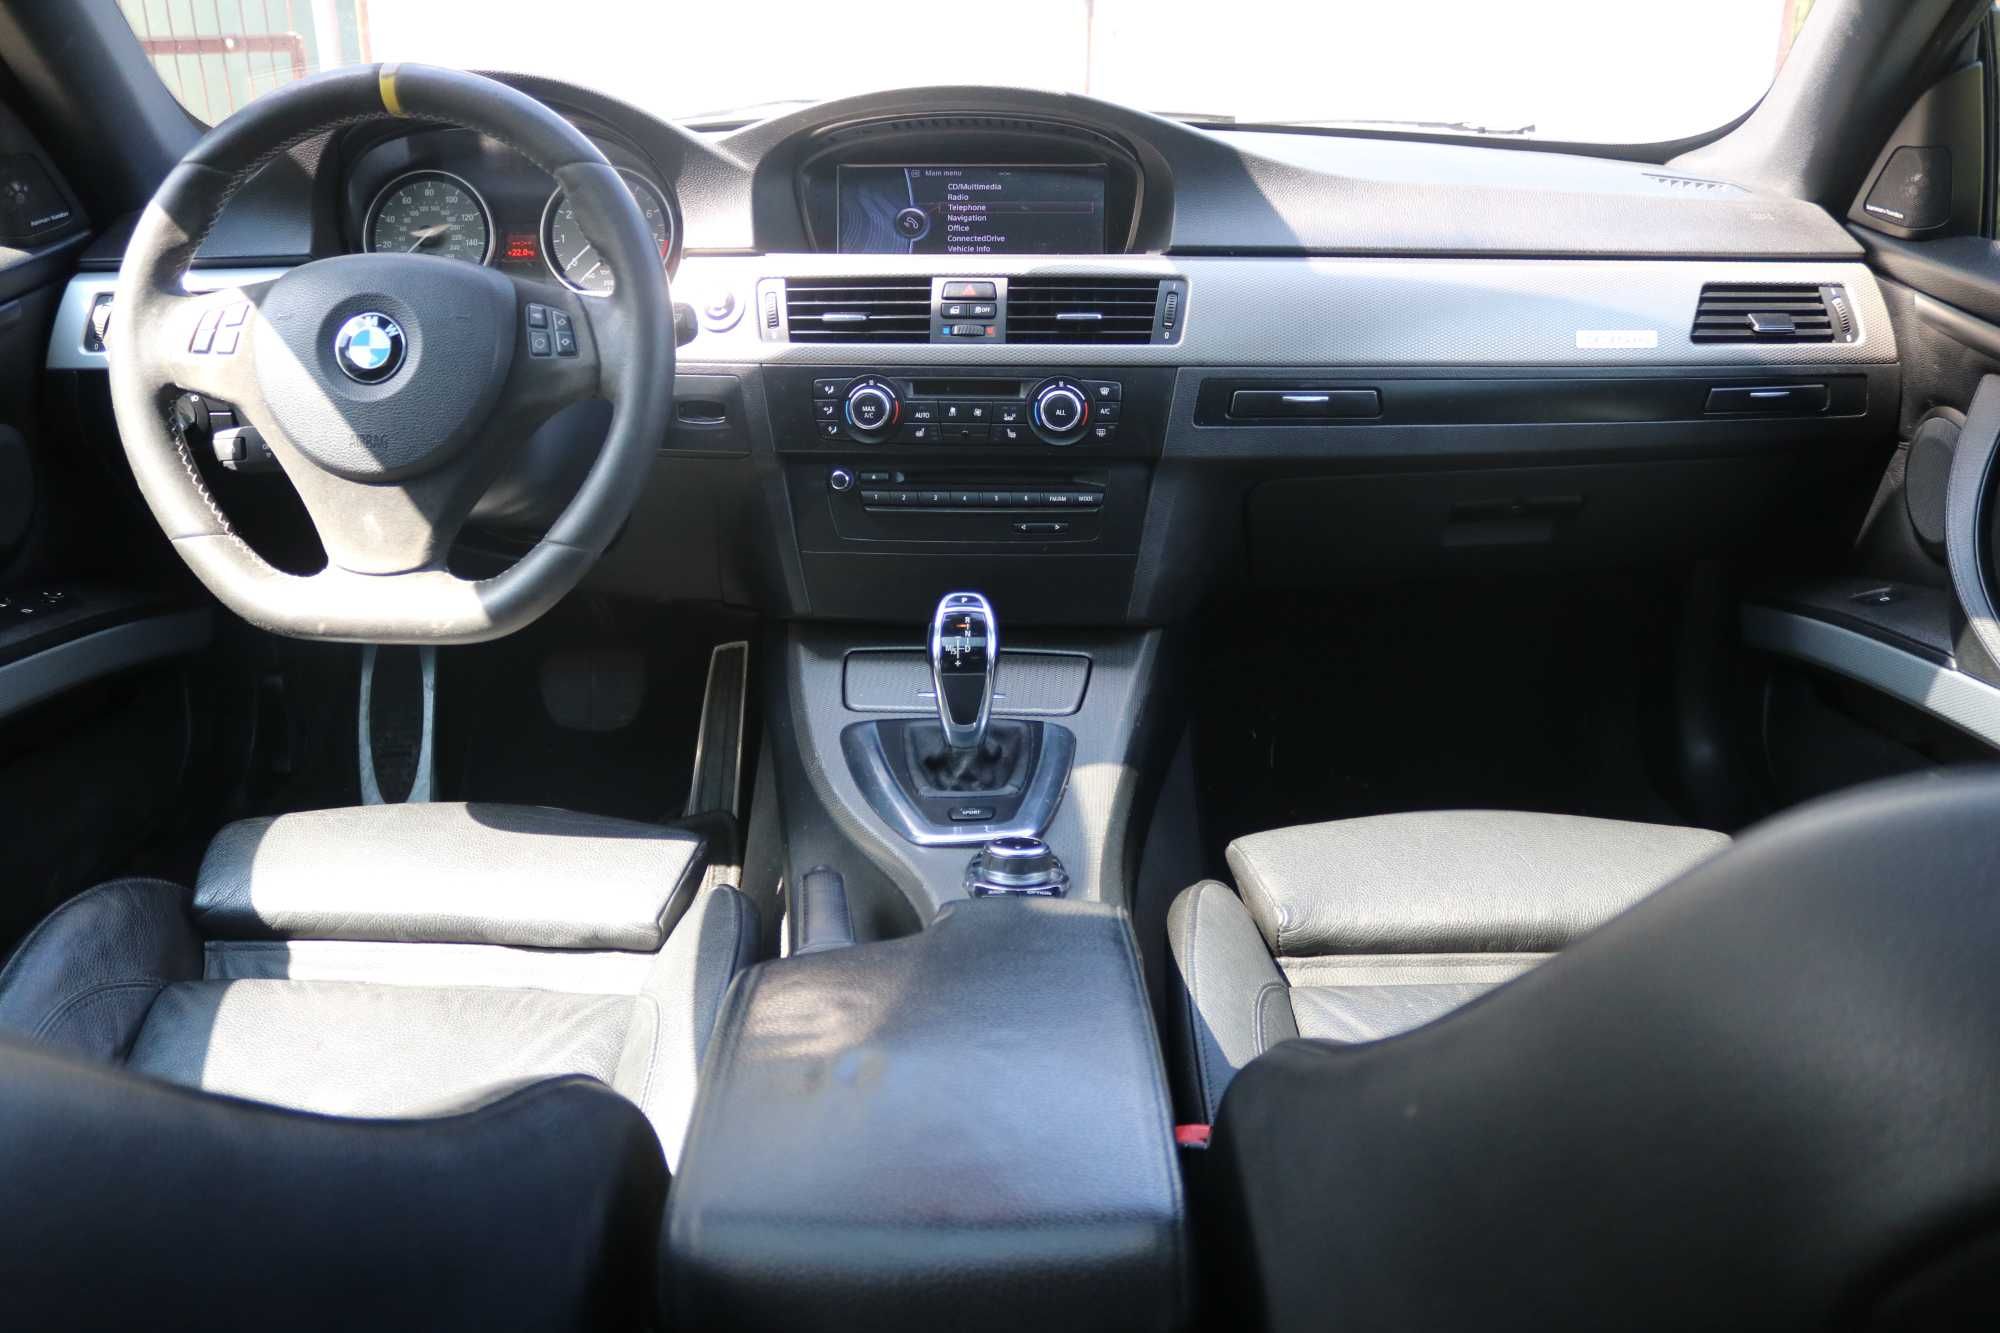 BMW E92 335is DKG